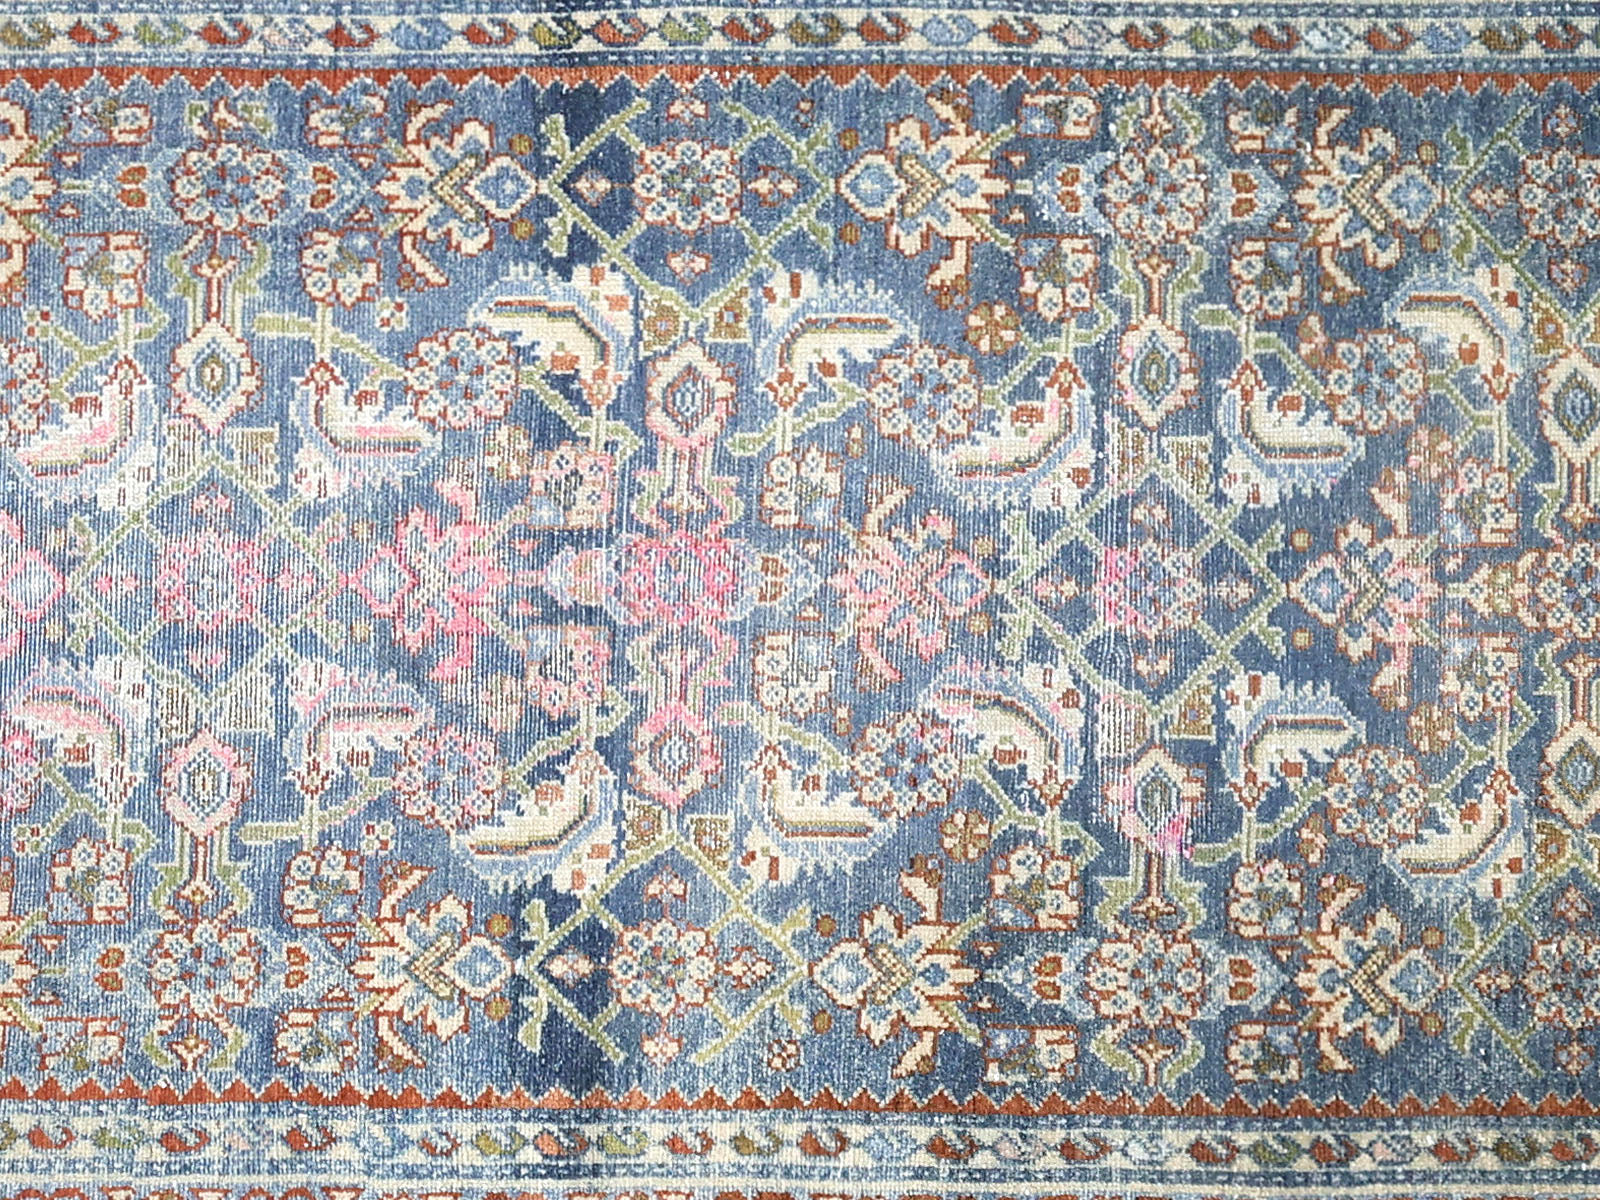 Semi Antique Persian Melayer Runner - 3'6" x 12'4"